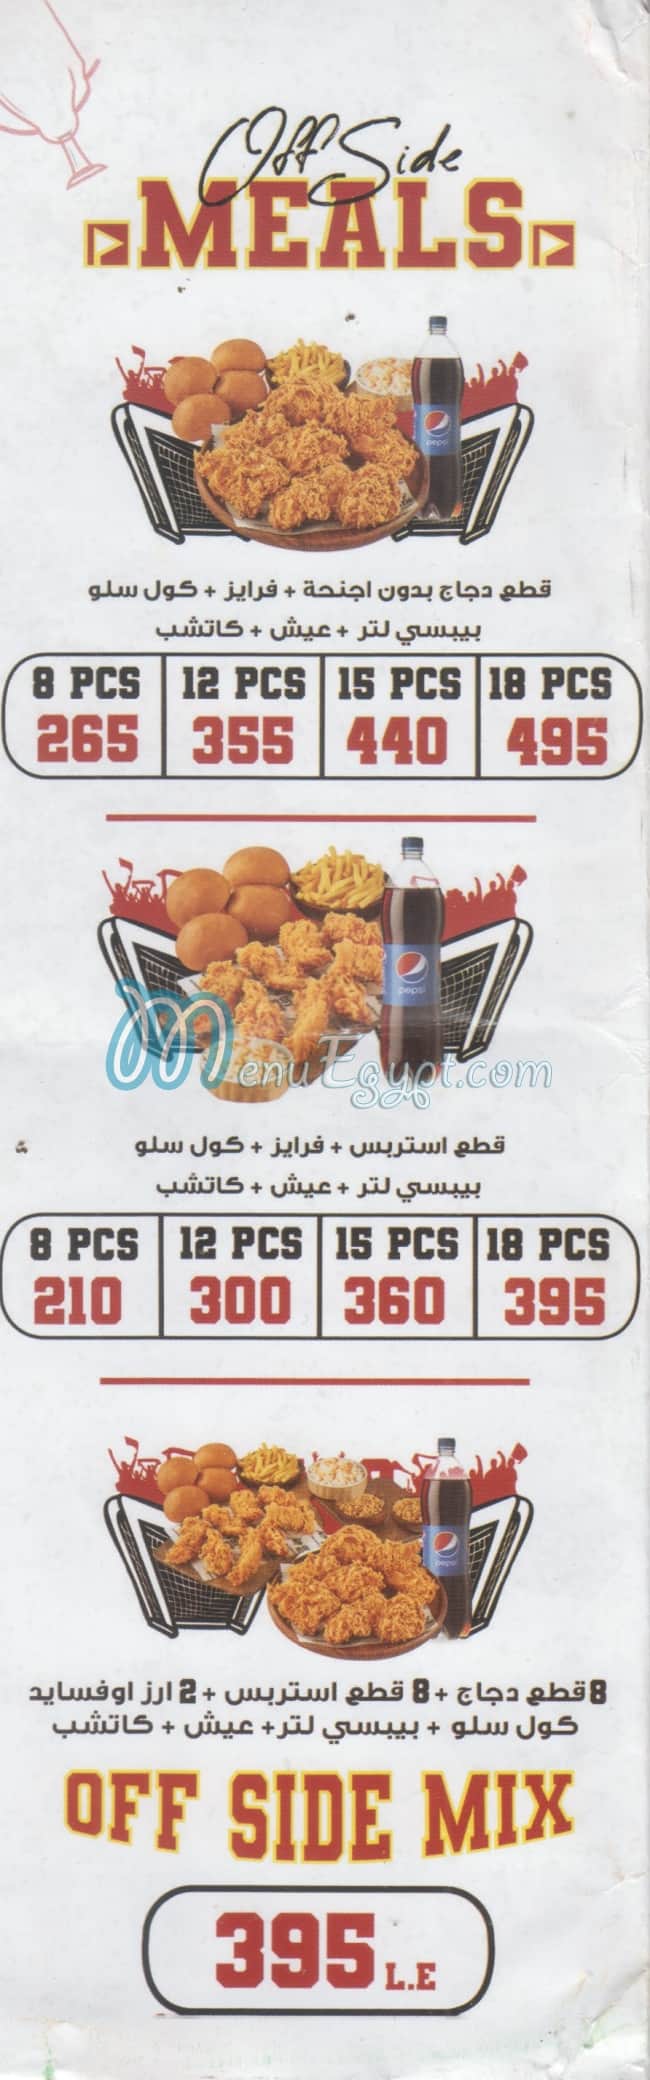 Off Side menu Egypt